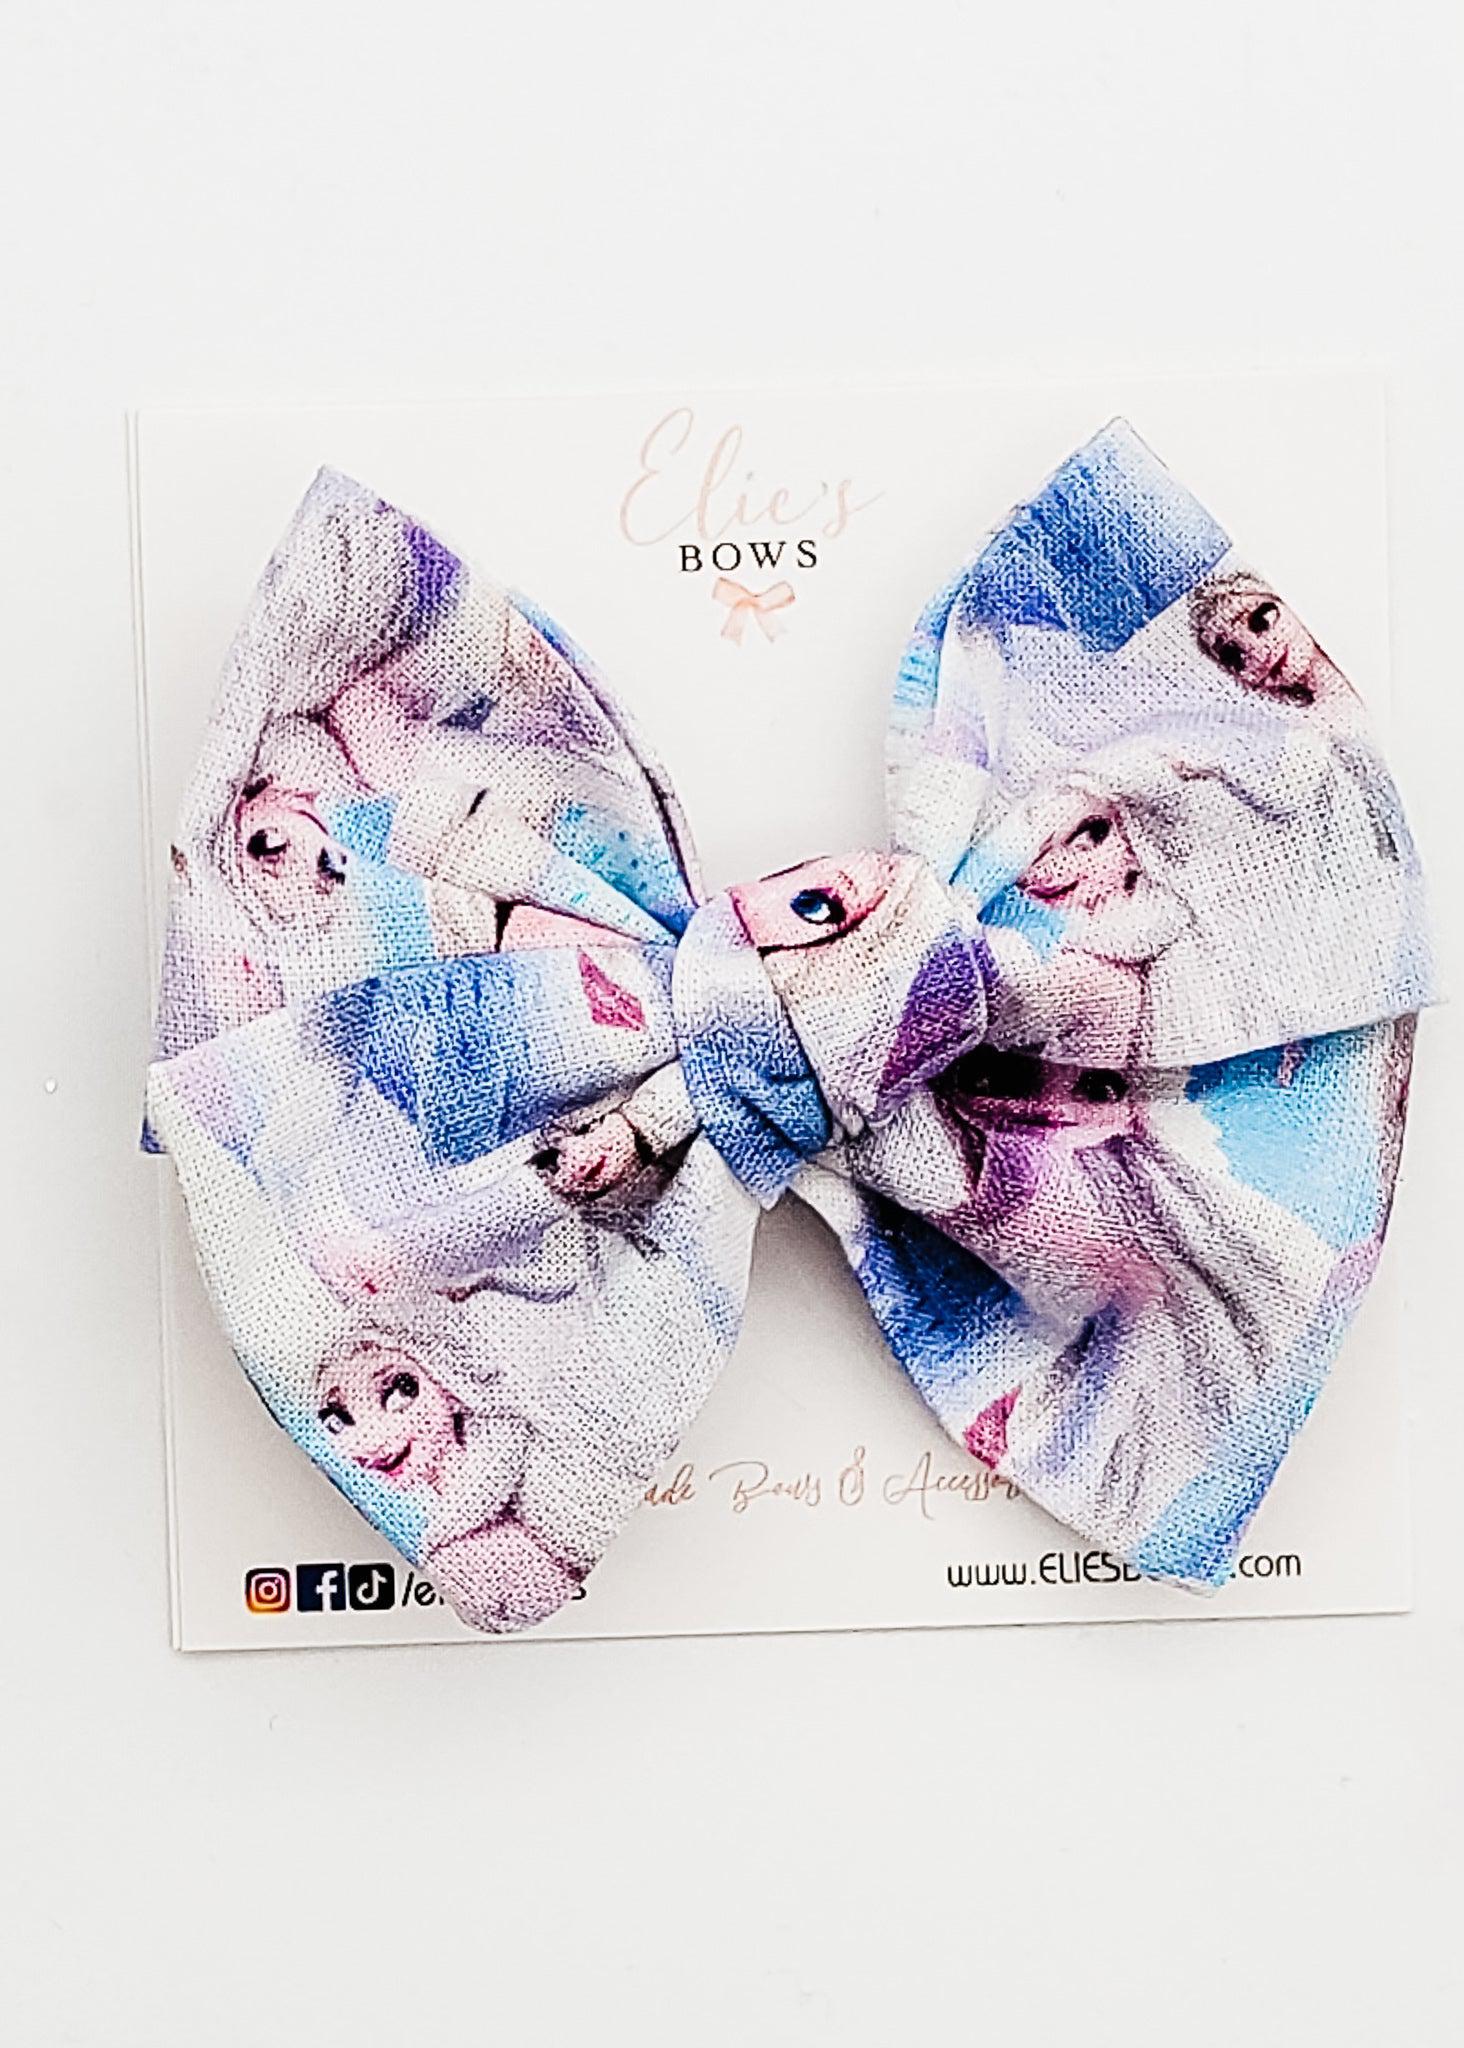 Snow Queen - Elie Fabric Bow - 3.5"-Bows-Elie’s Bows